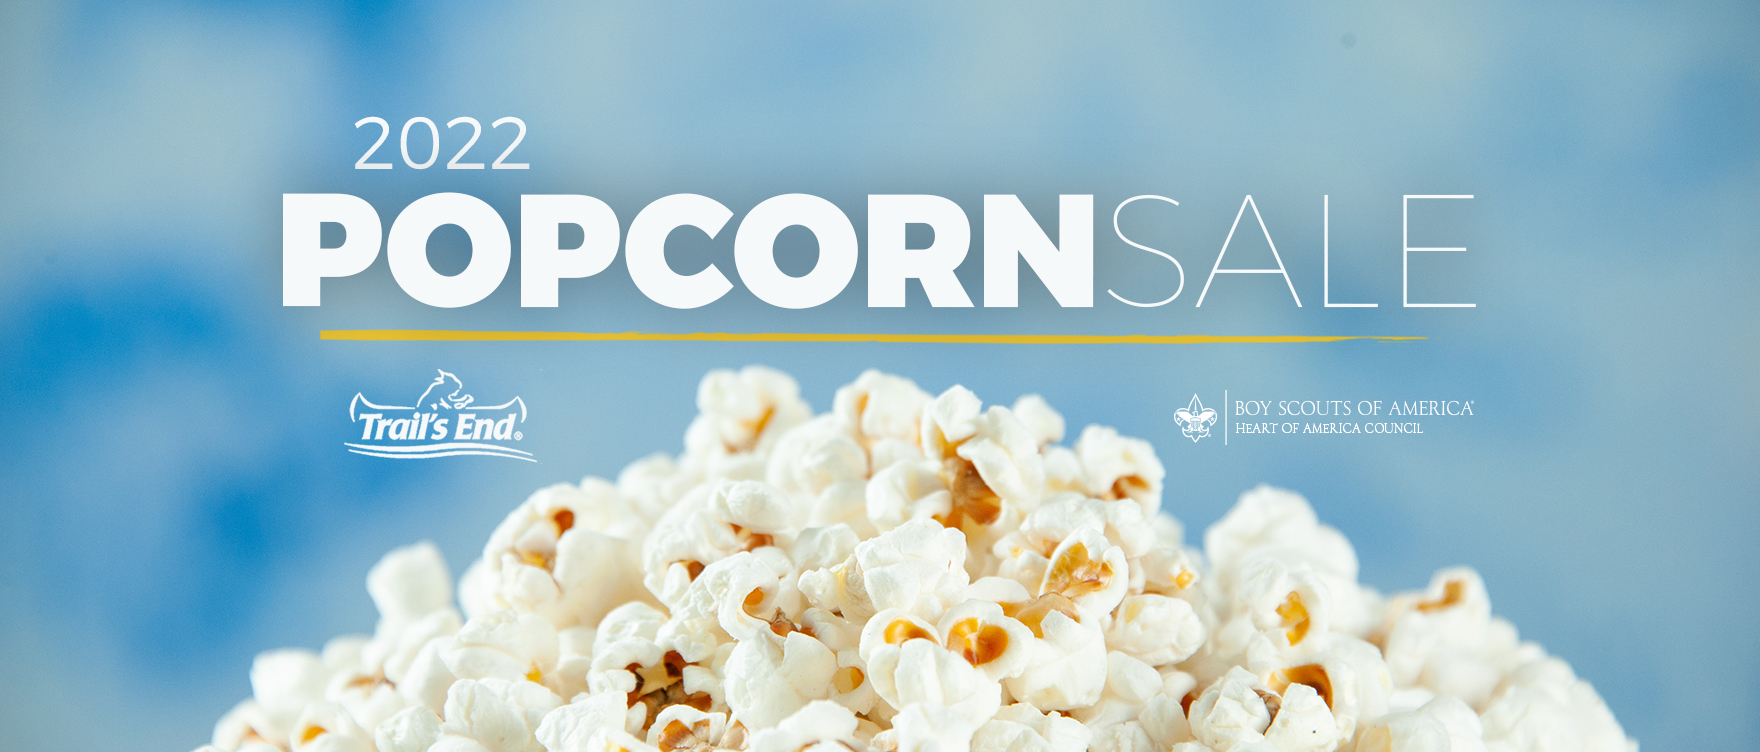 Popcorn Sales Graphic